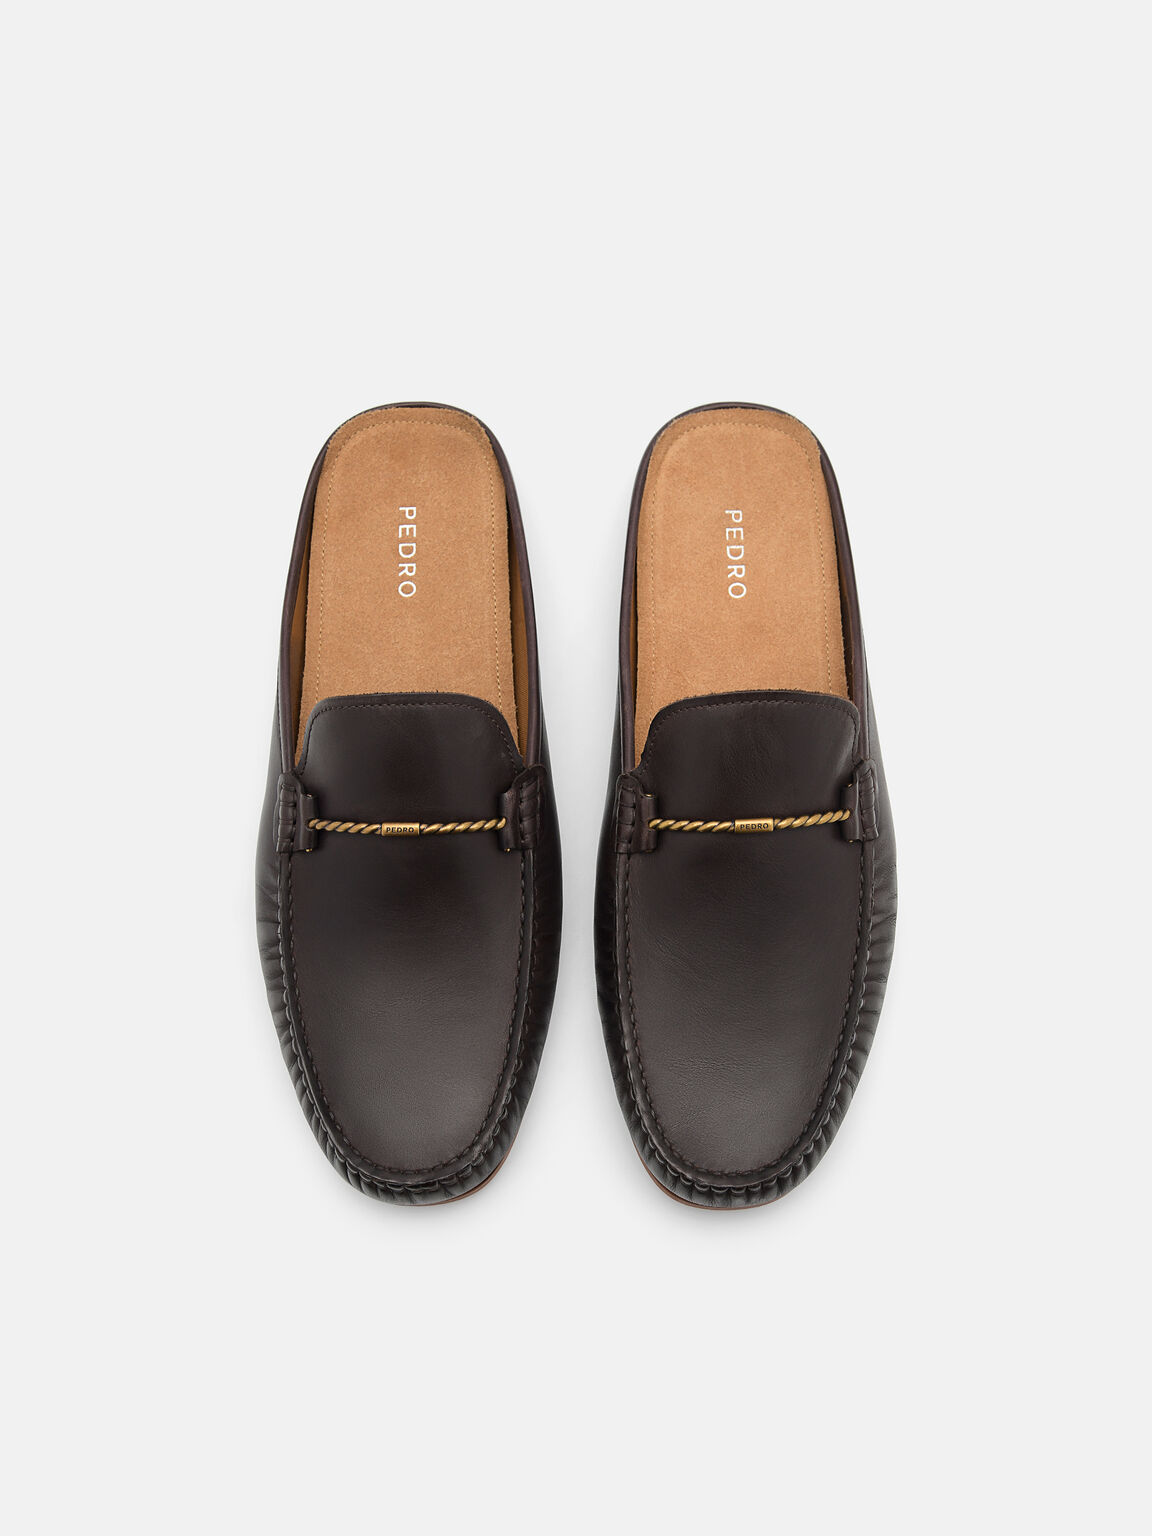 Hawser Leather Slip-On Driving Shoes, Dark Brown, hi-res